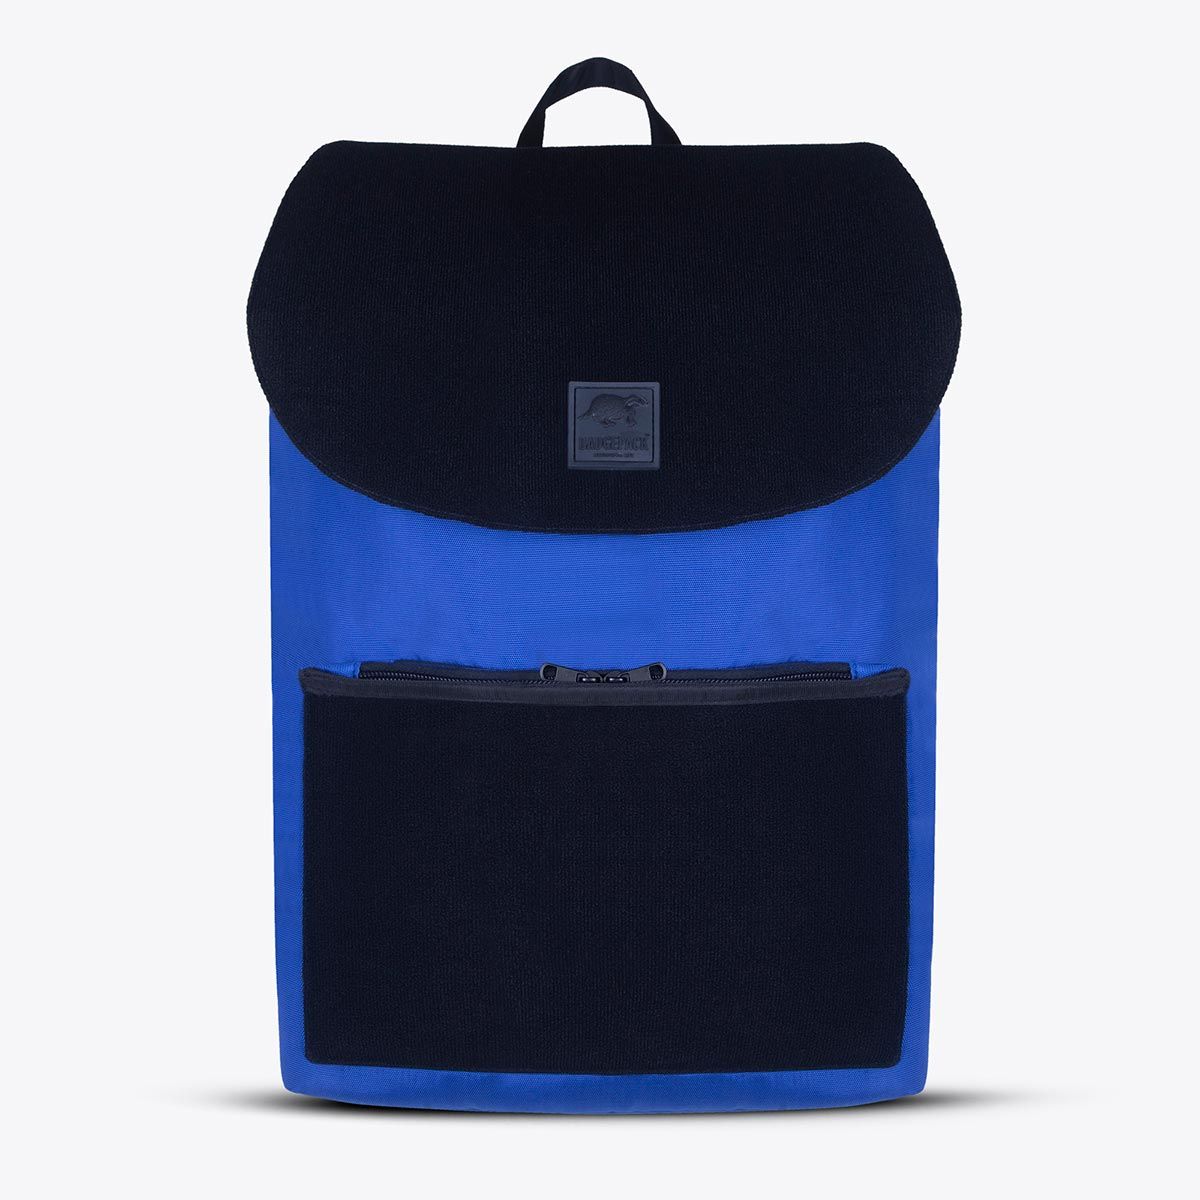 BadgePack Designs Kenji Backpack - Blue Bag with 5 printed Badges